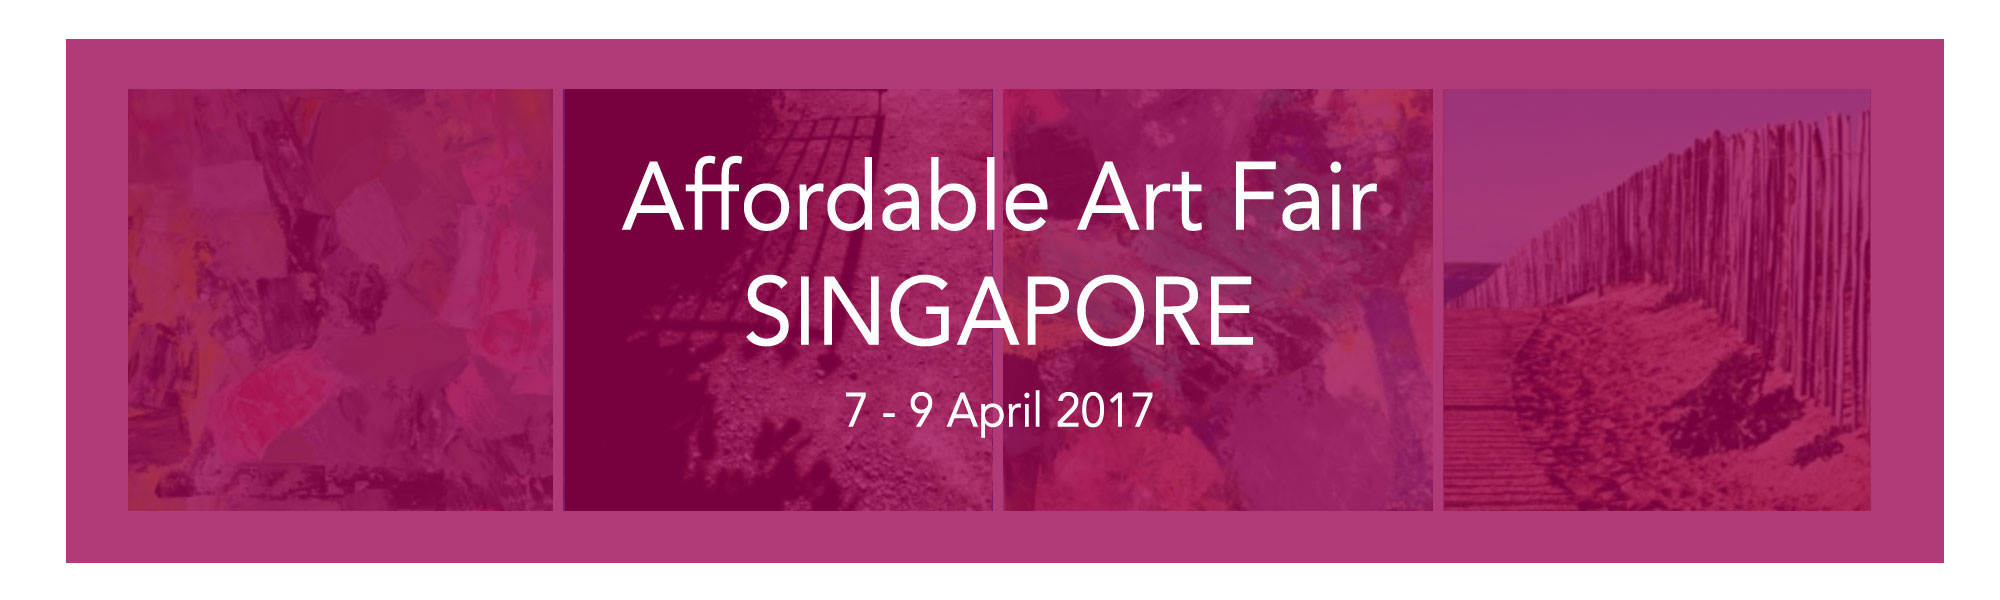 Affordable Art Fair Singapore